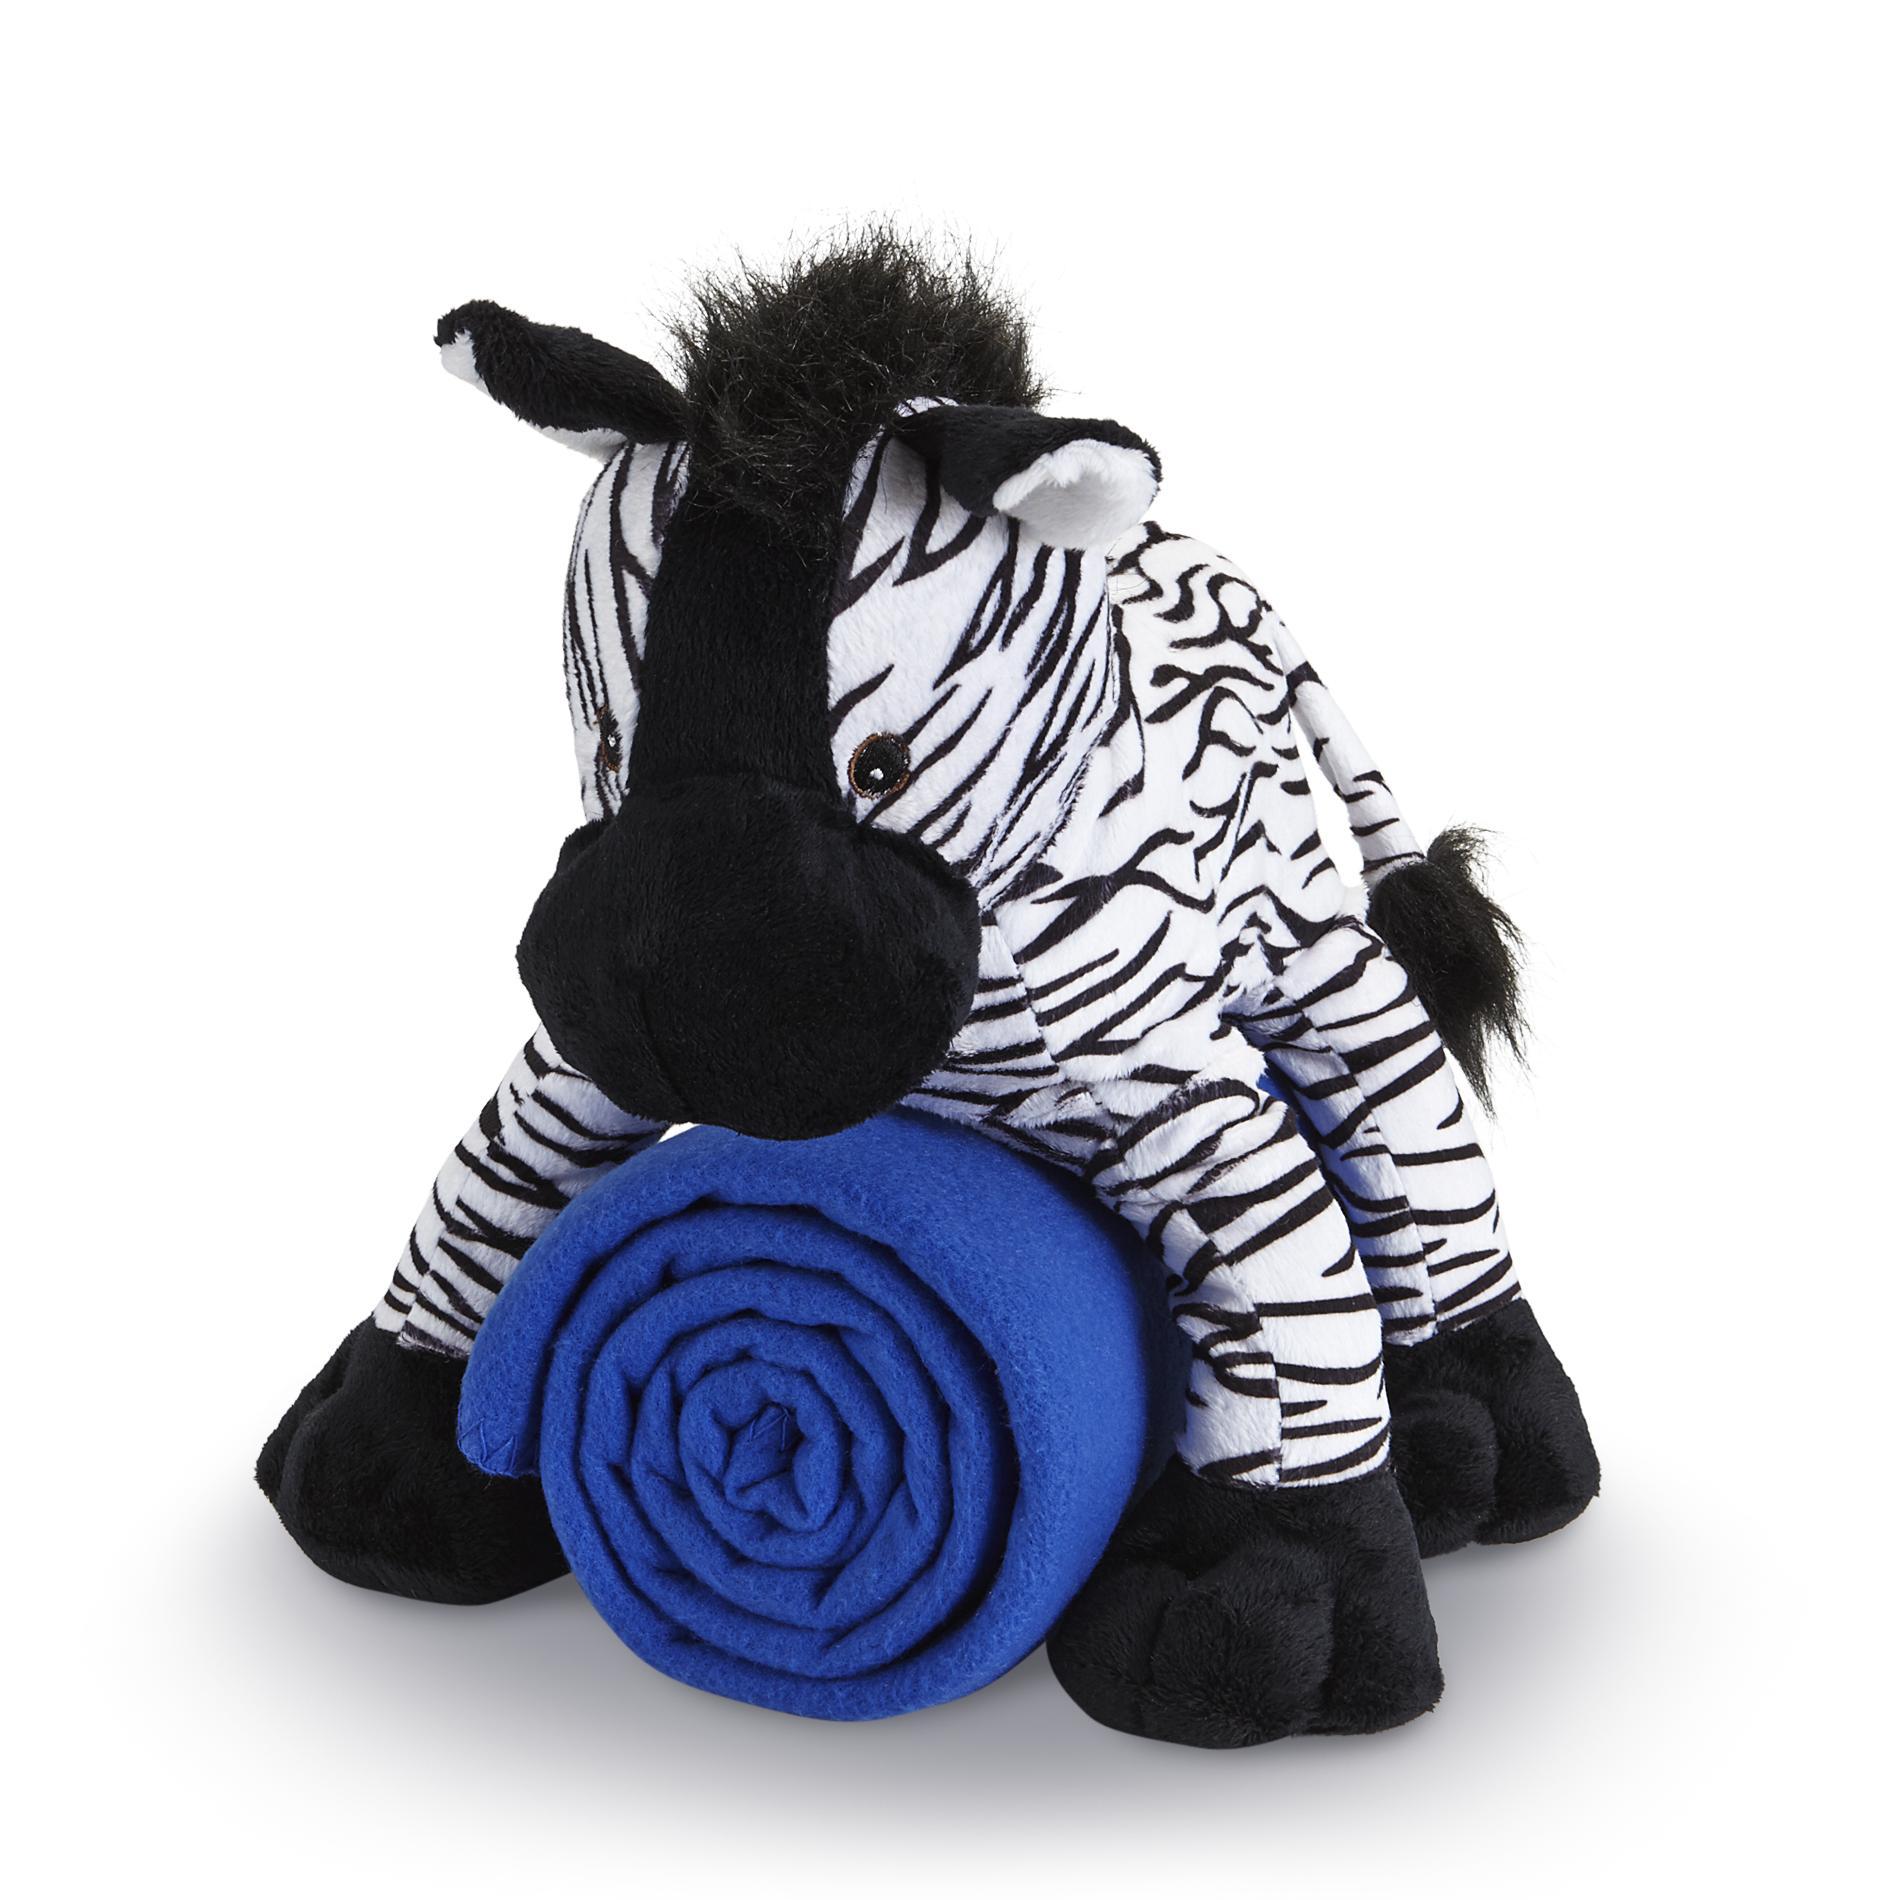 Cannon Cuddly Friend Stuffed Zebra and Throw Set